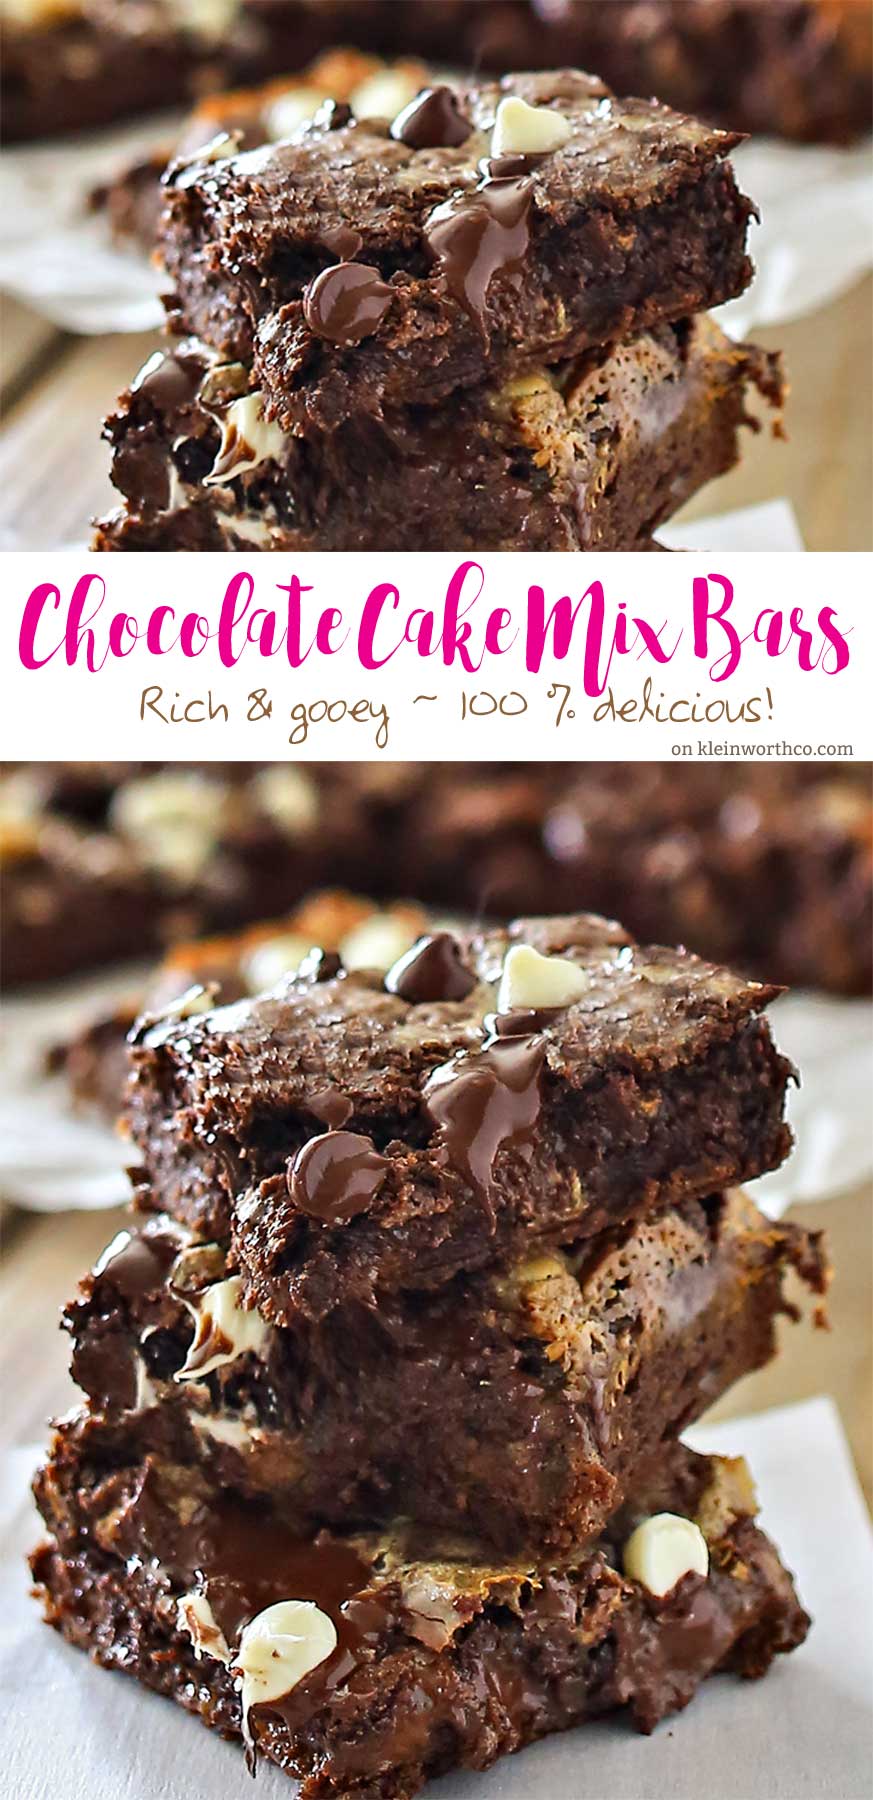 Chocolate Cake Mix Bars are a yummy bar recipe